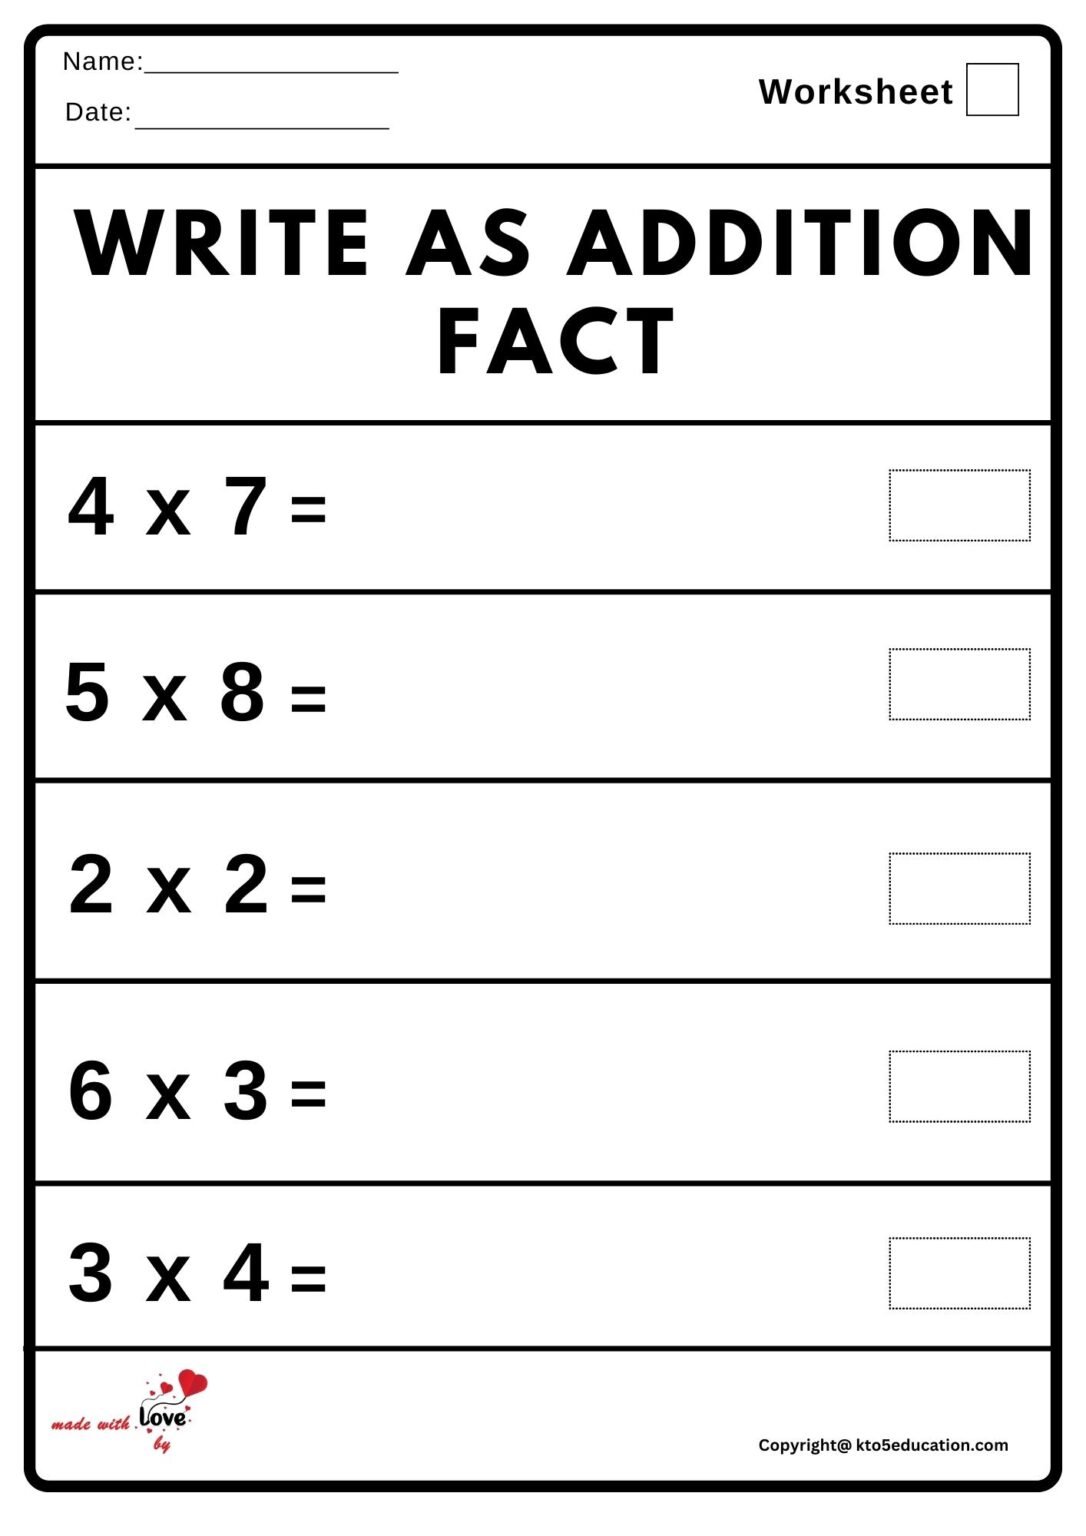 write-as-addition-fact-worksheet-2-free-download